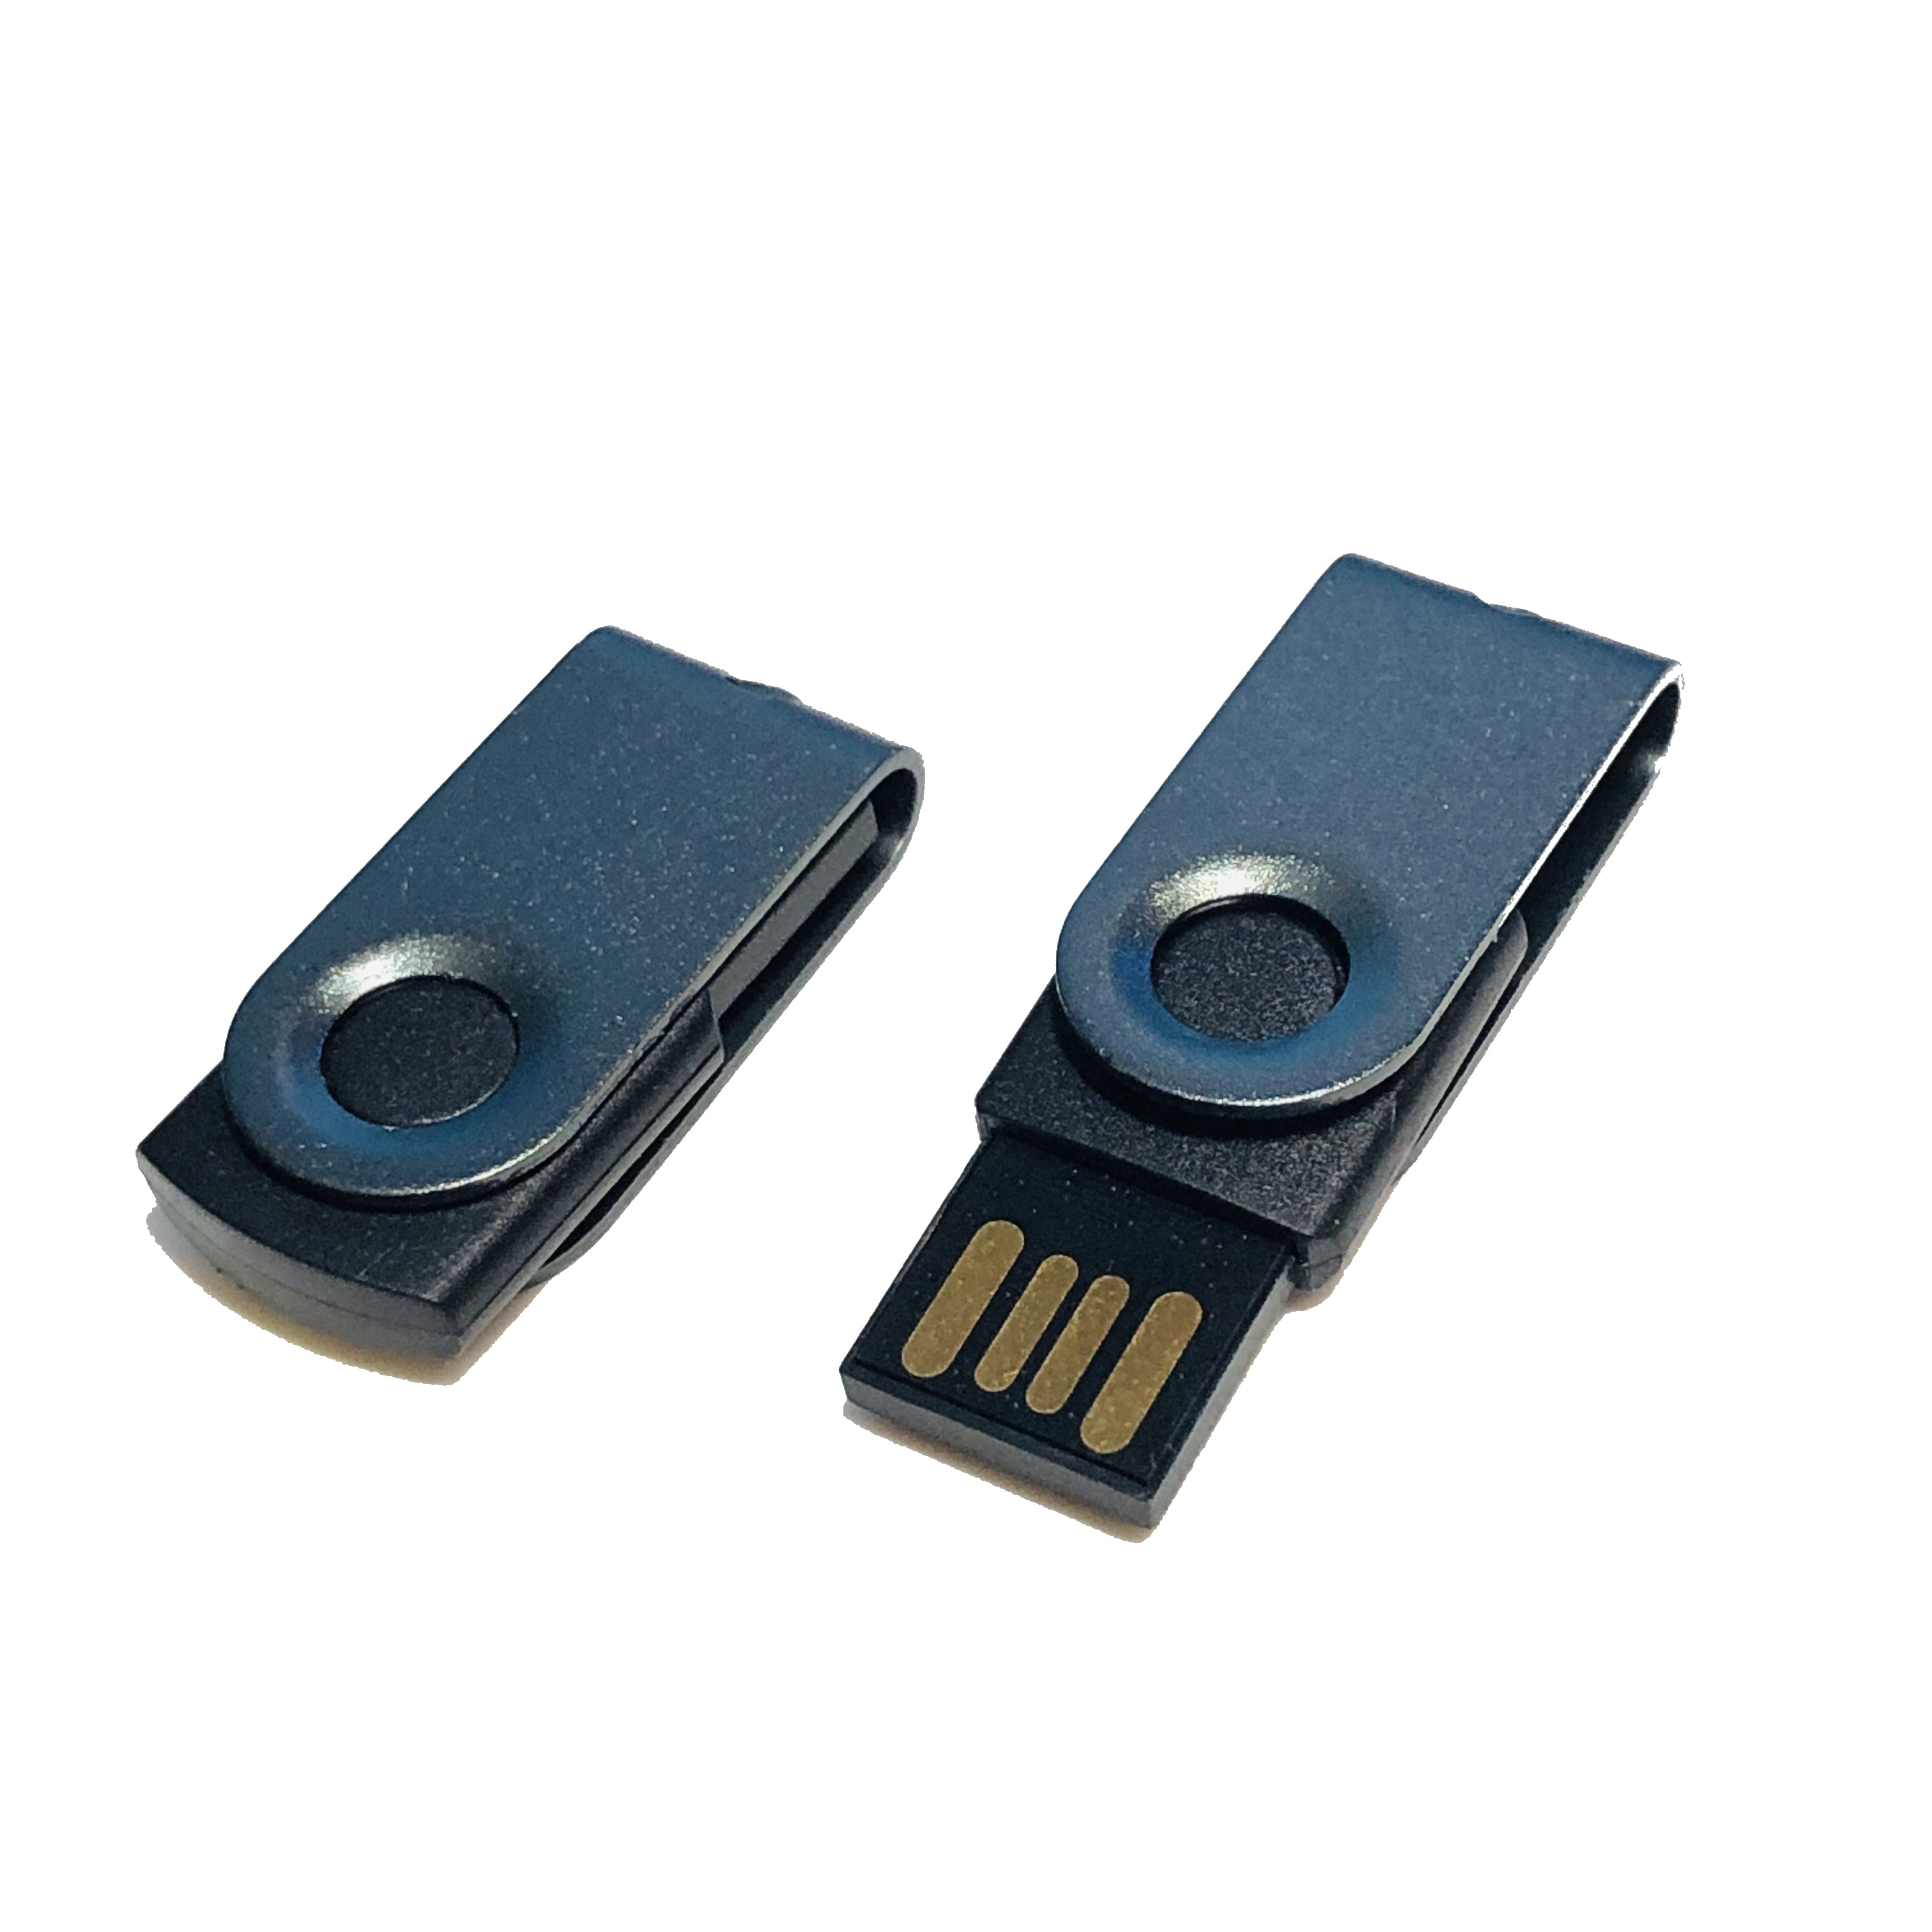 GERMANY USB MINI-SWIVEL GB) (Schwarz-Graumetall, USB-Stick 64 ®